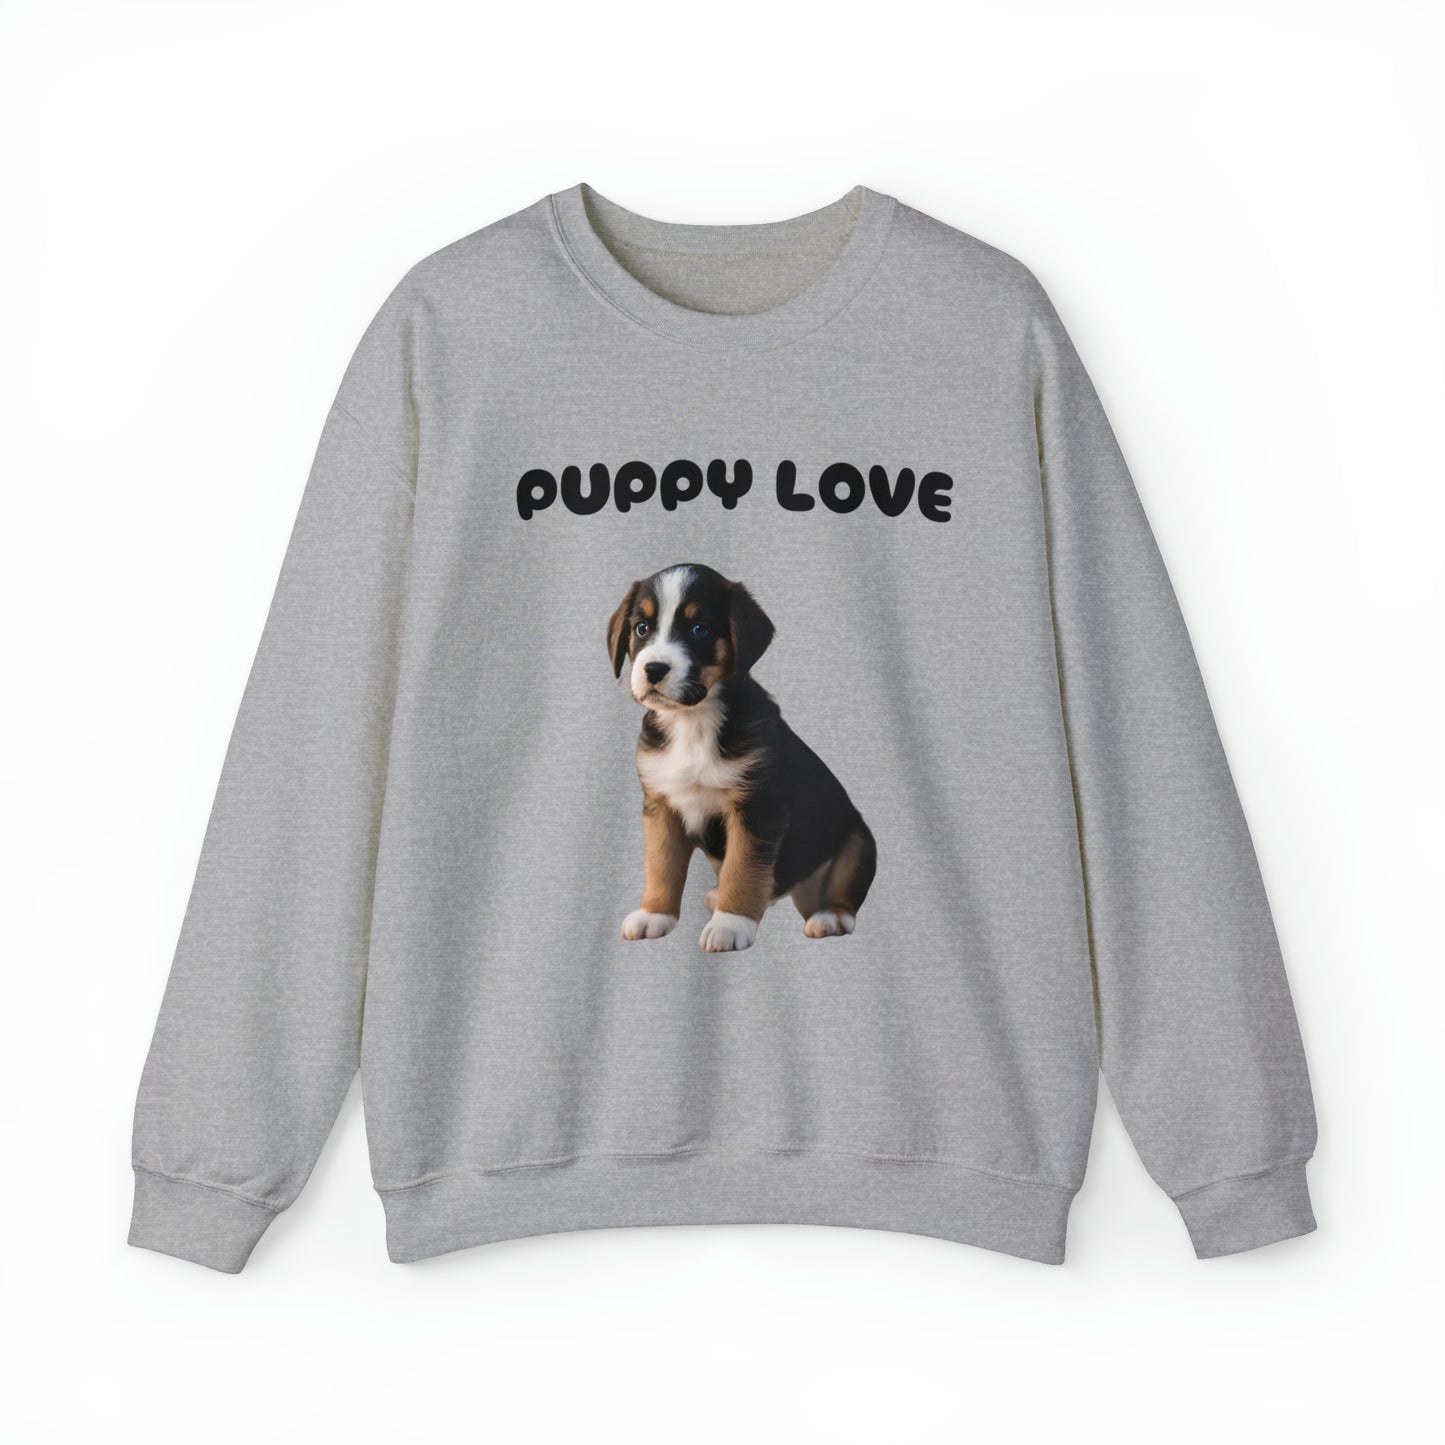 Puppy Love sweatshirt for dog lovers